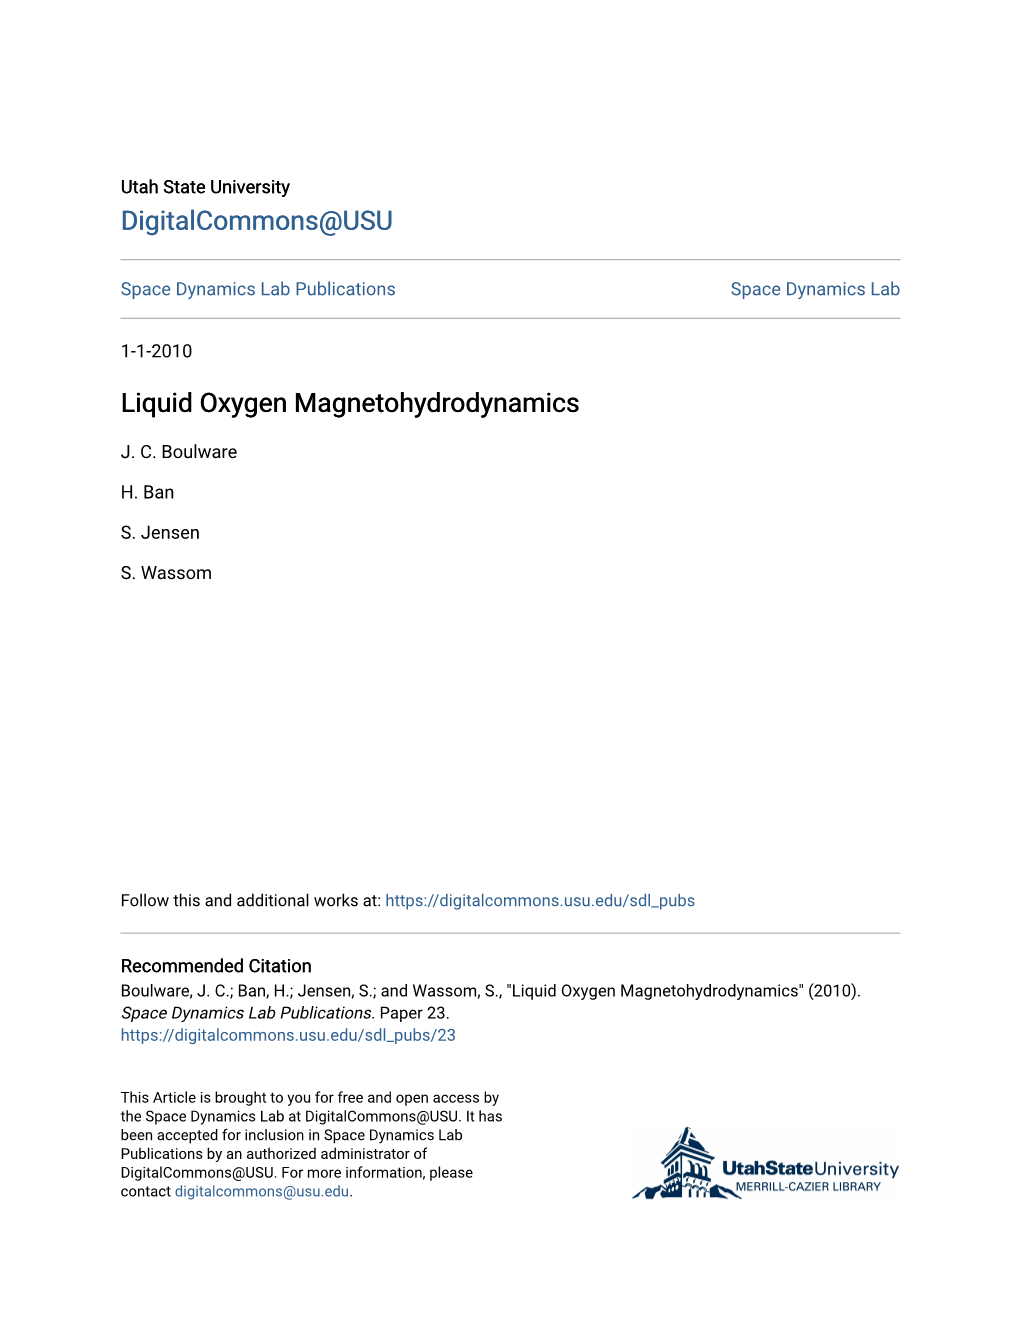 Liquid Oxygen Magnetohydrodynamics